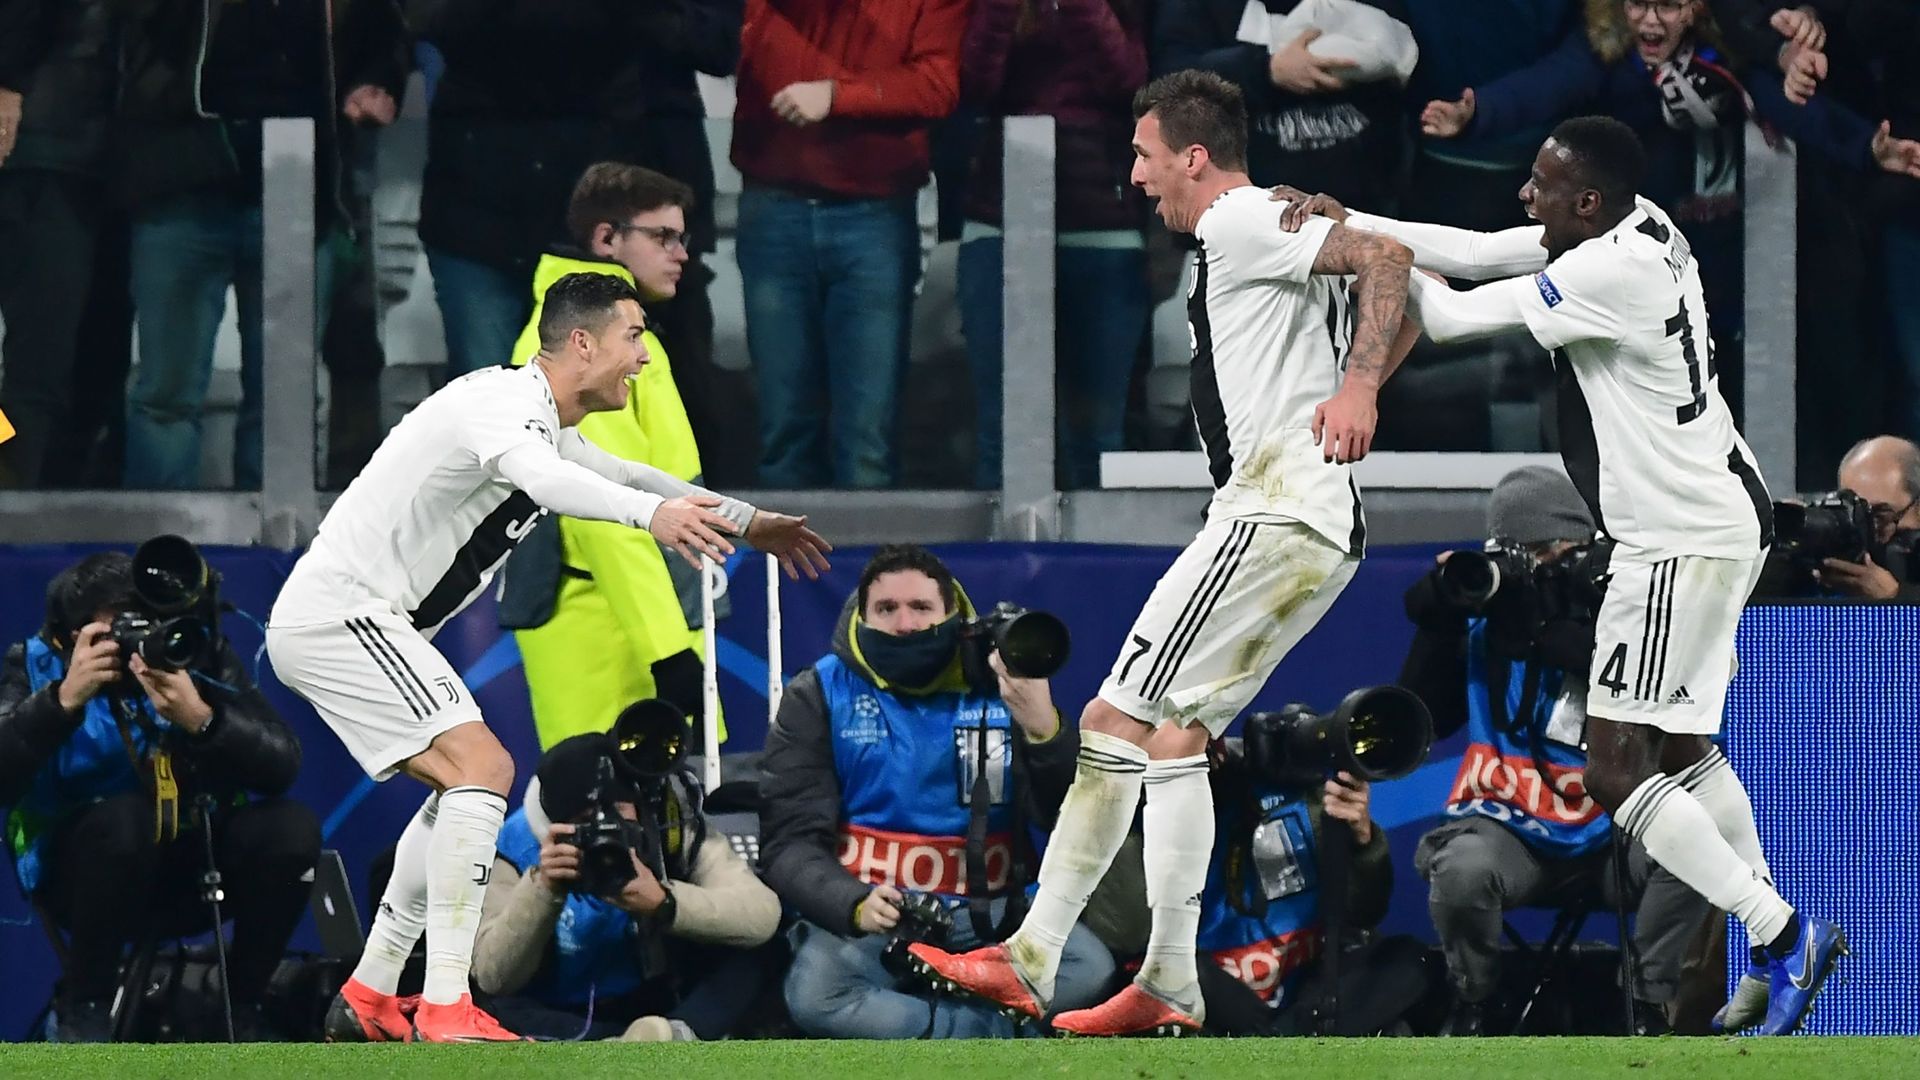 Le talent offensif de Cristiano Ronaldo et de Mario Mandzukic a suffi au bonheur de la Juve